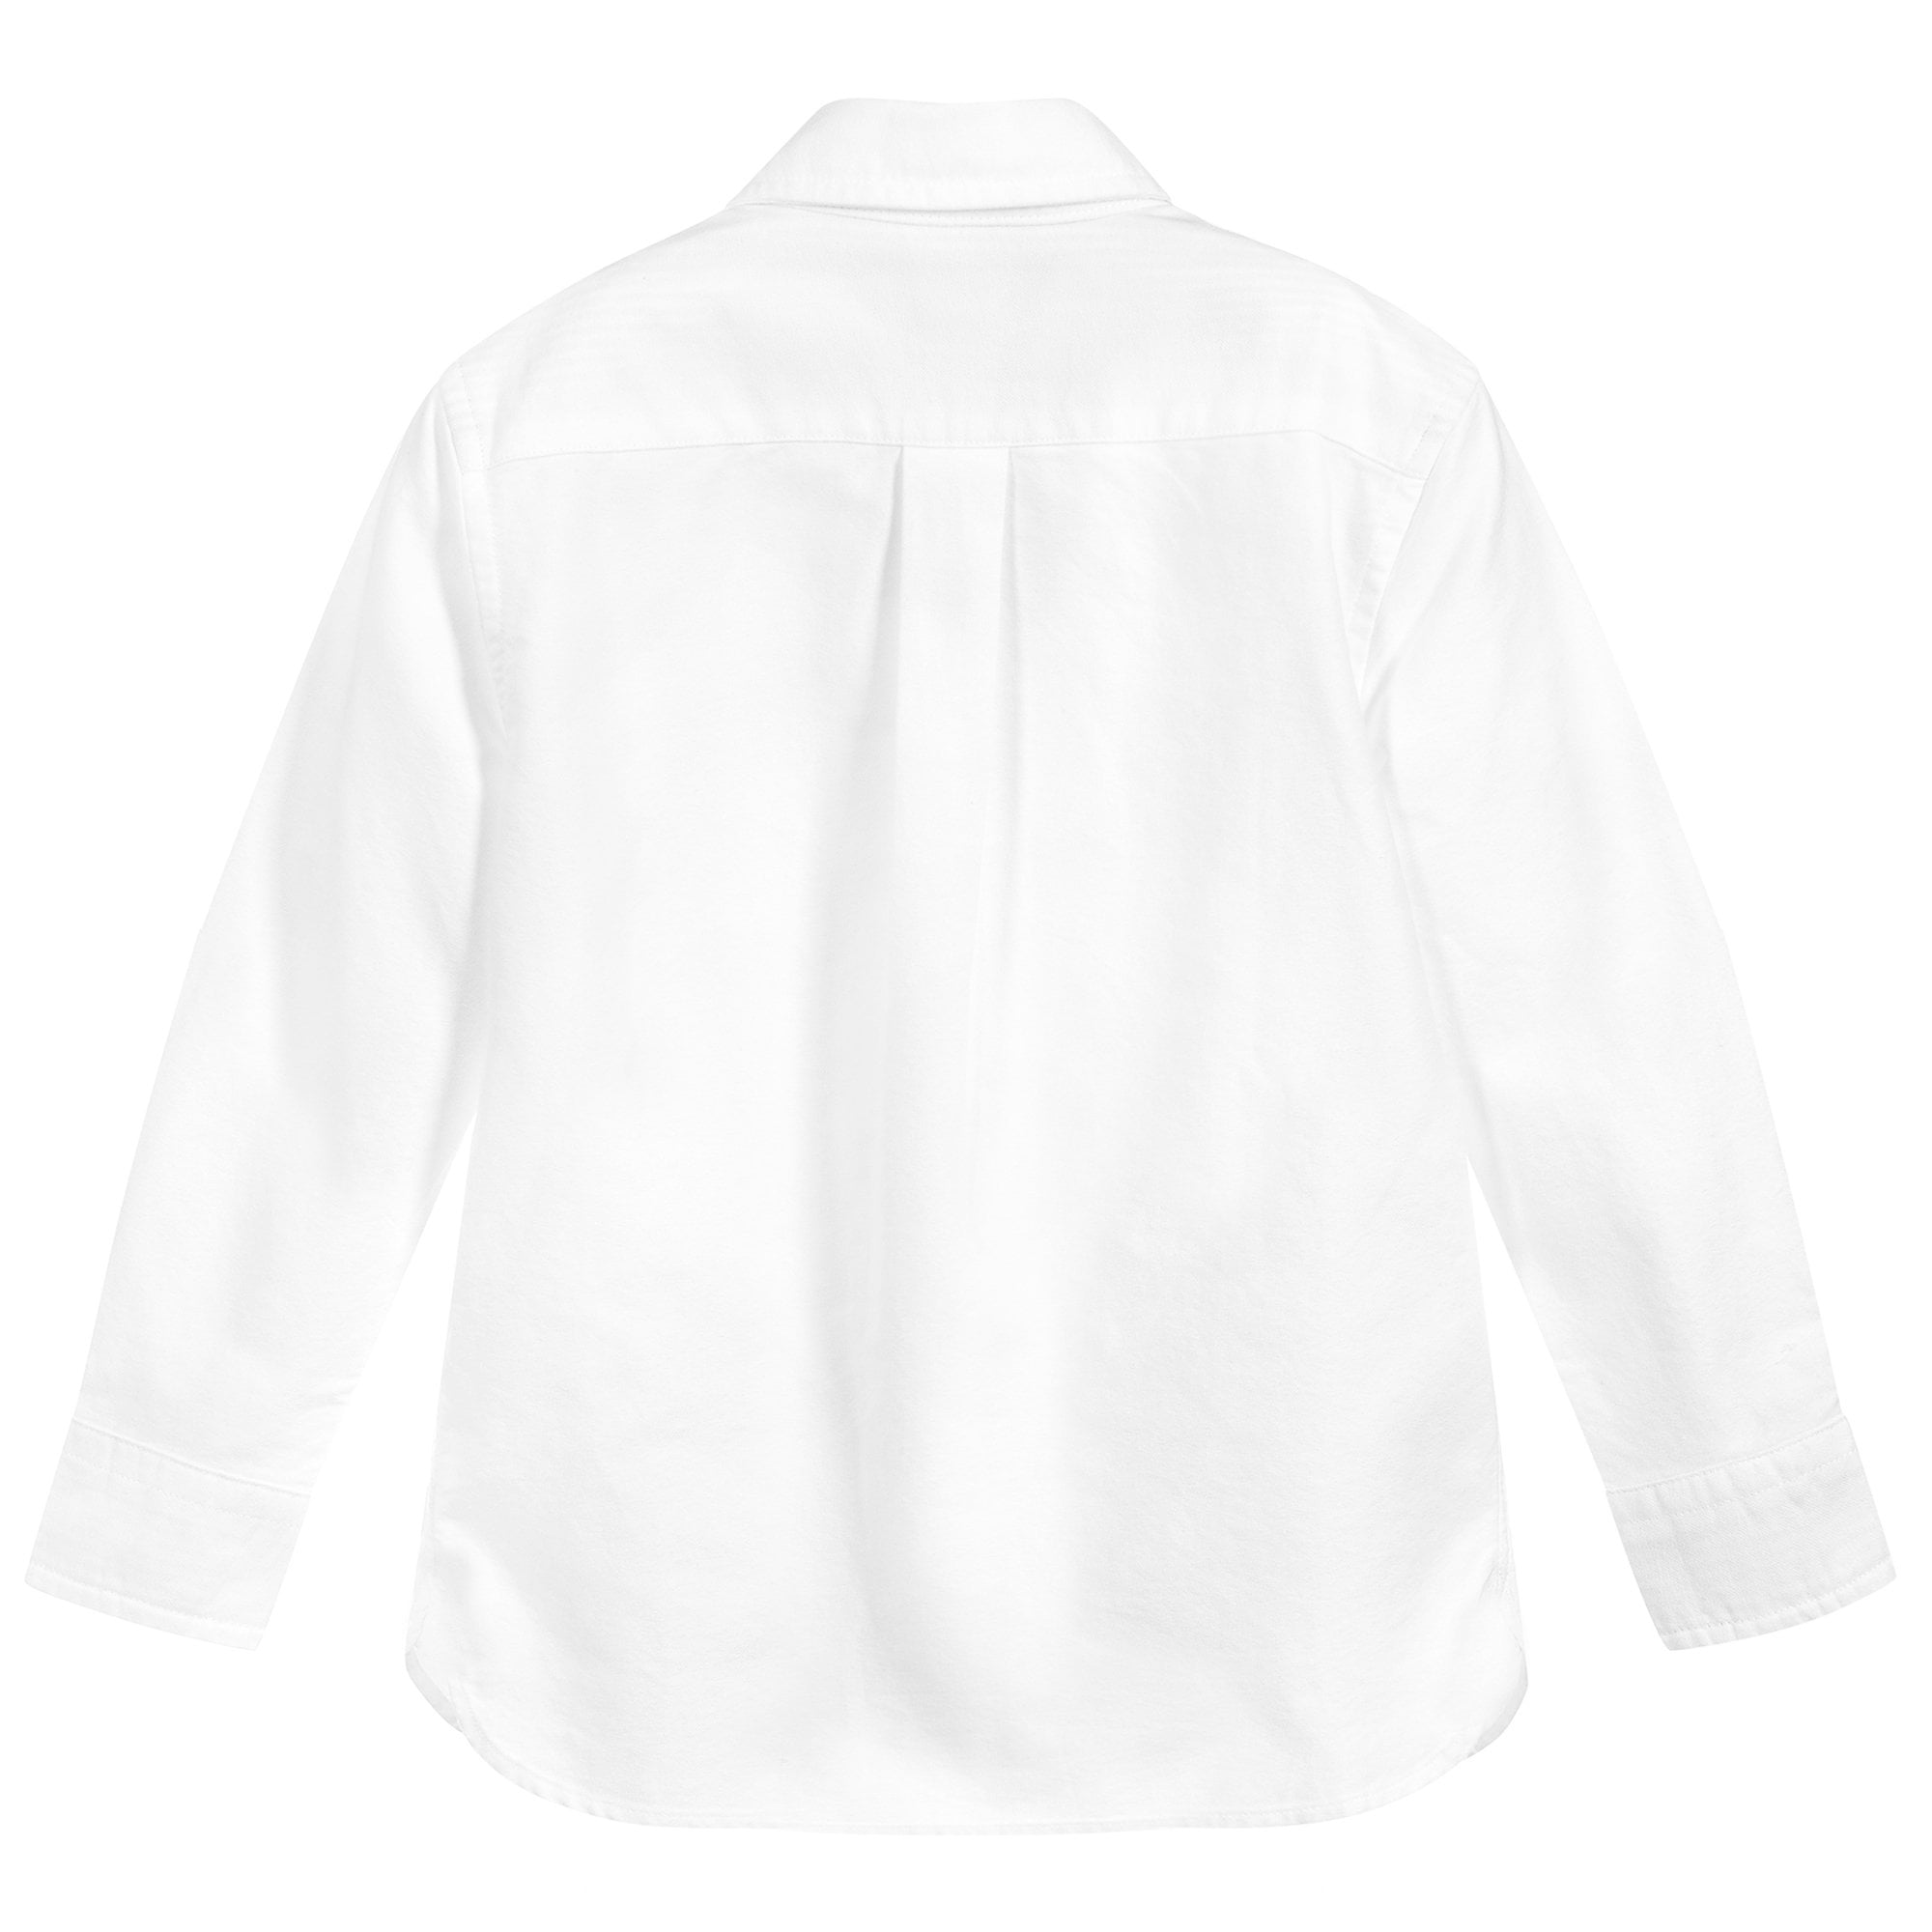 Ralph Lauren Boy&#39;s Oxford Pony Shirt White